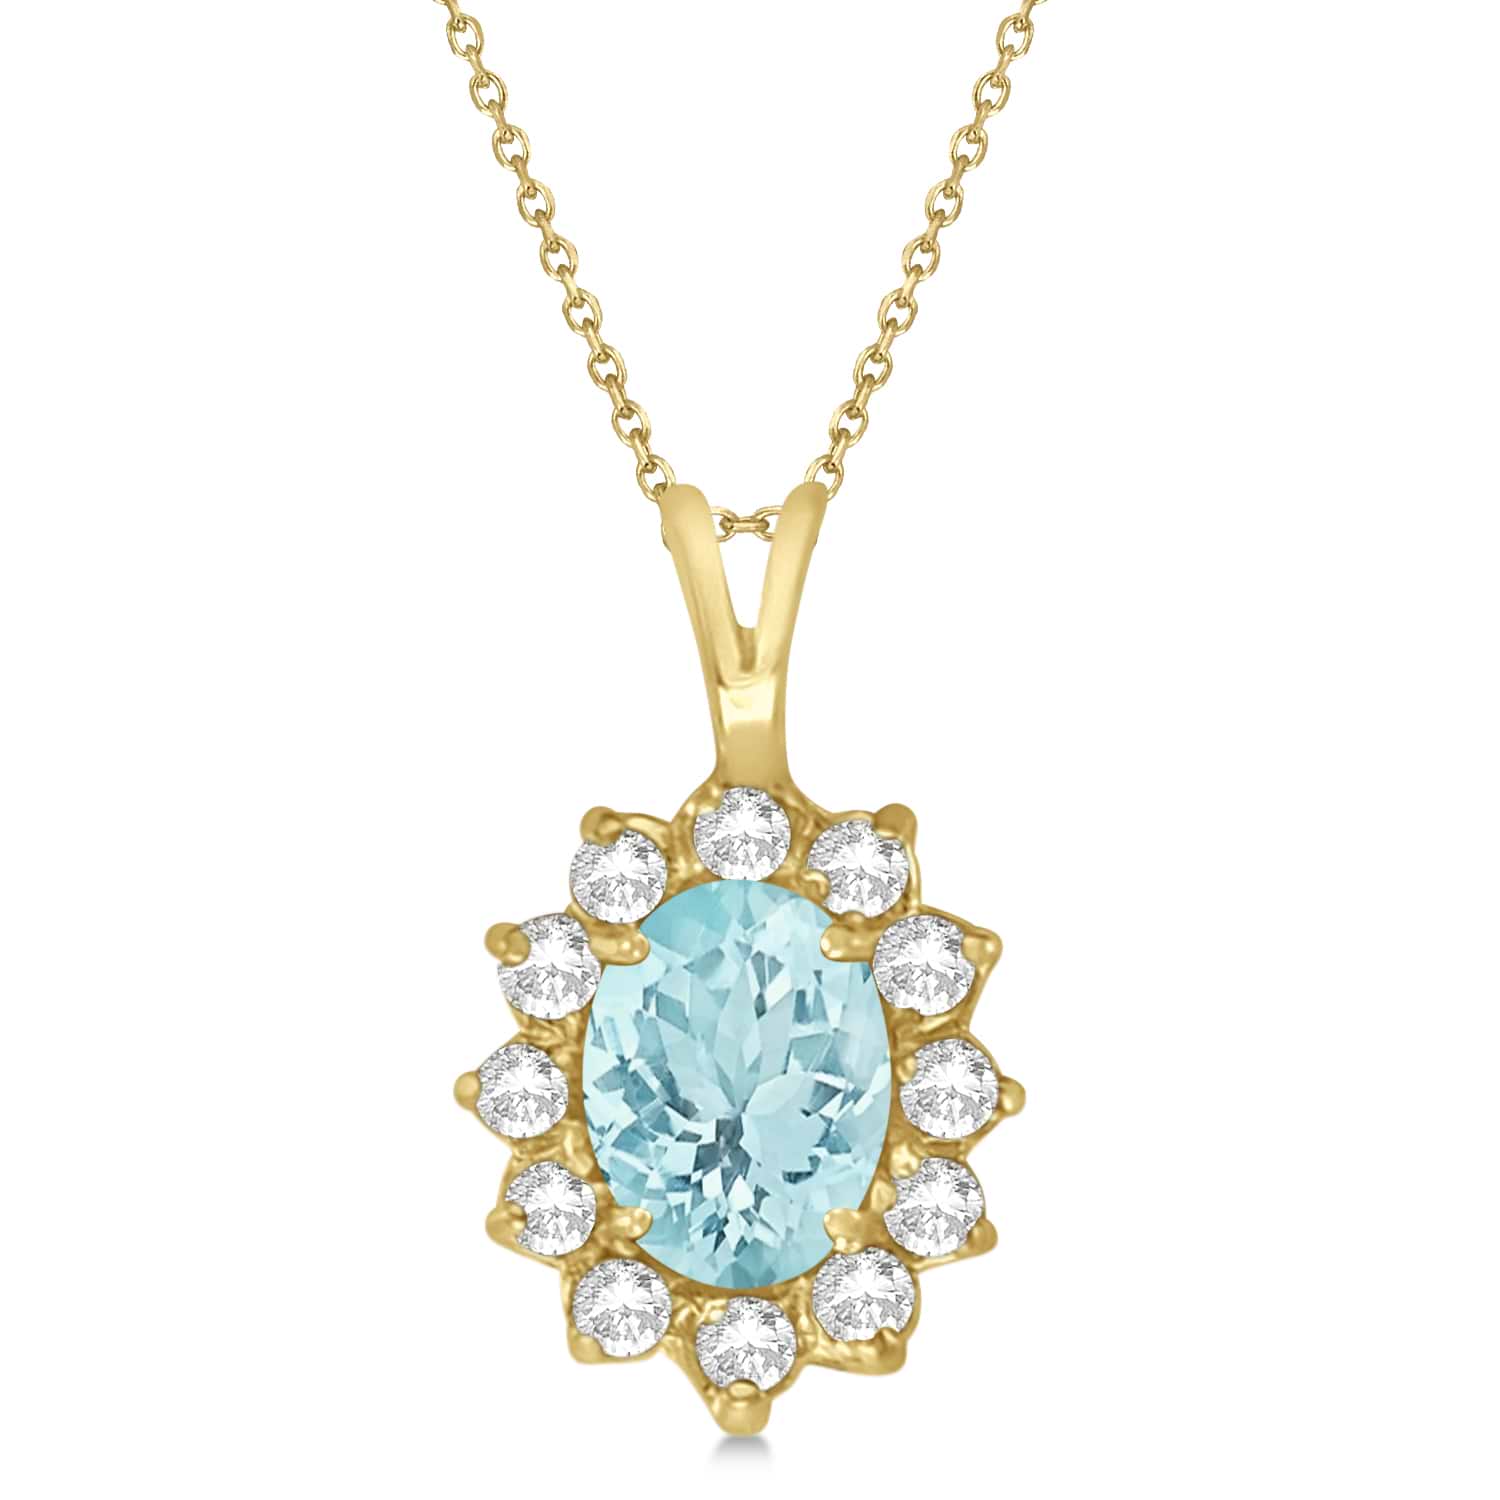 Aquamarine & Diamond Accented Pendant Necklace 14k Yellow Gold (1.70ctw)